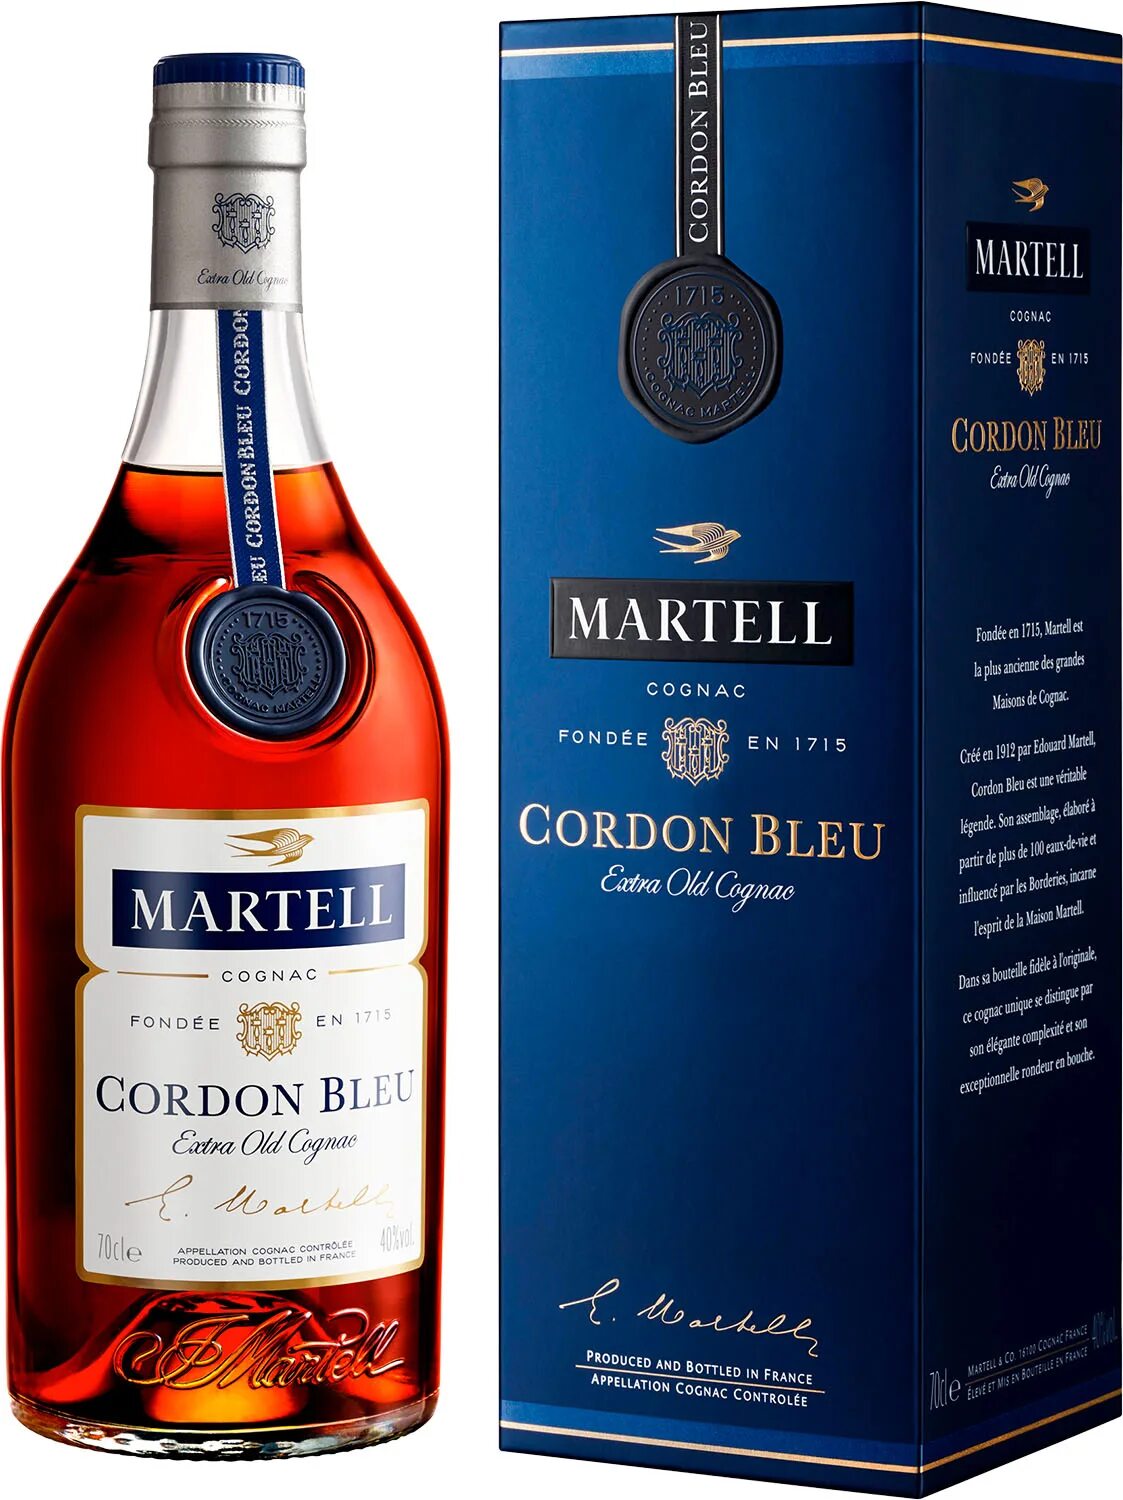 Martell 0.7 цена. Коньяк Martell cordon bleu. Французский коньяк Мартель vs. Martell 0.7. Мартель коньяк 0.7.